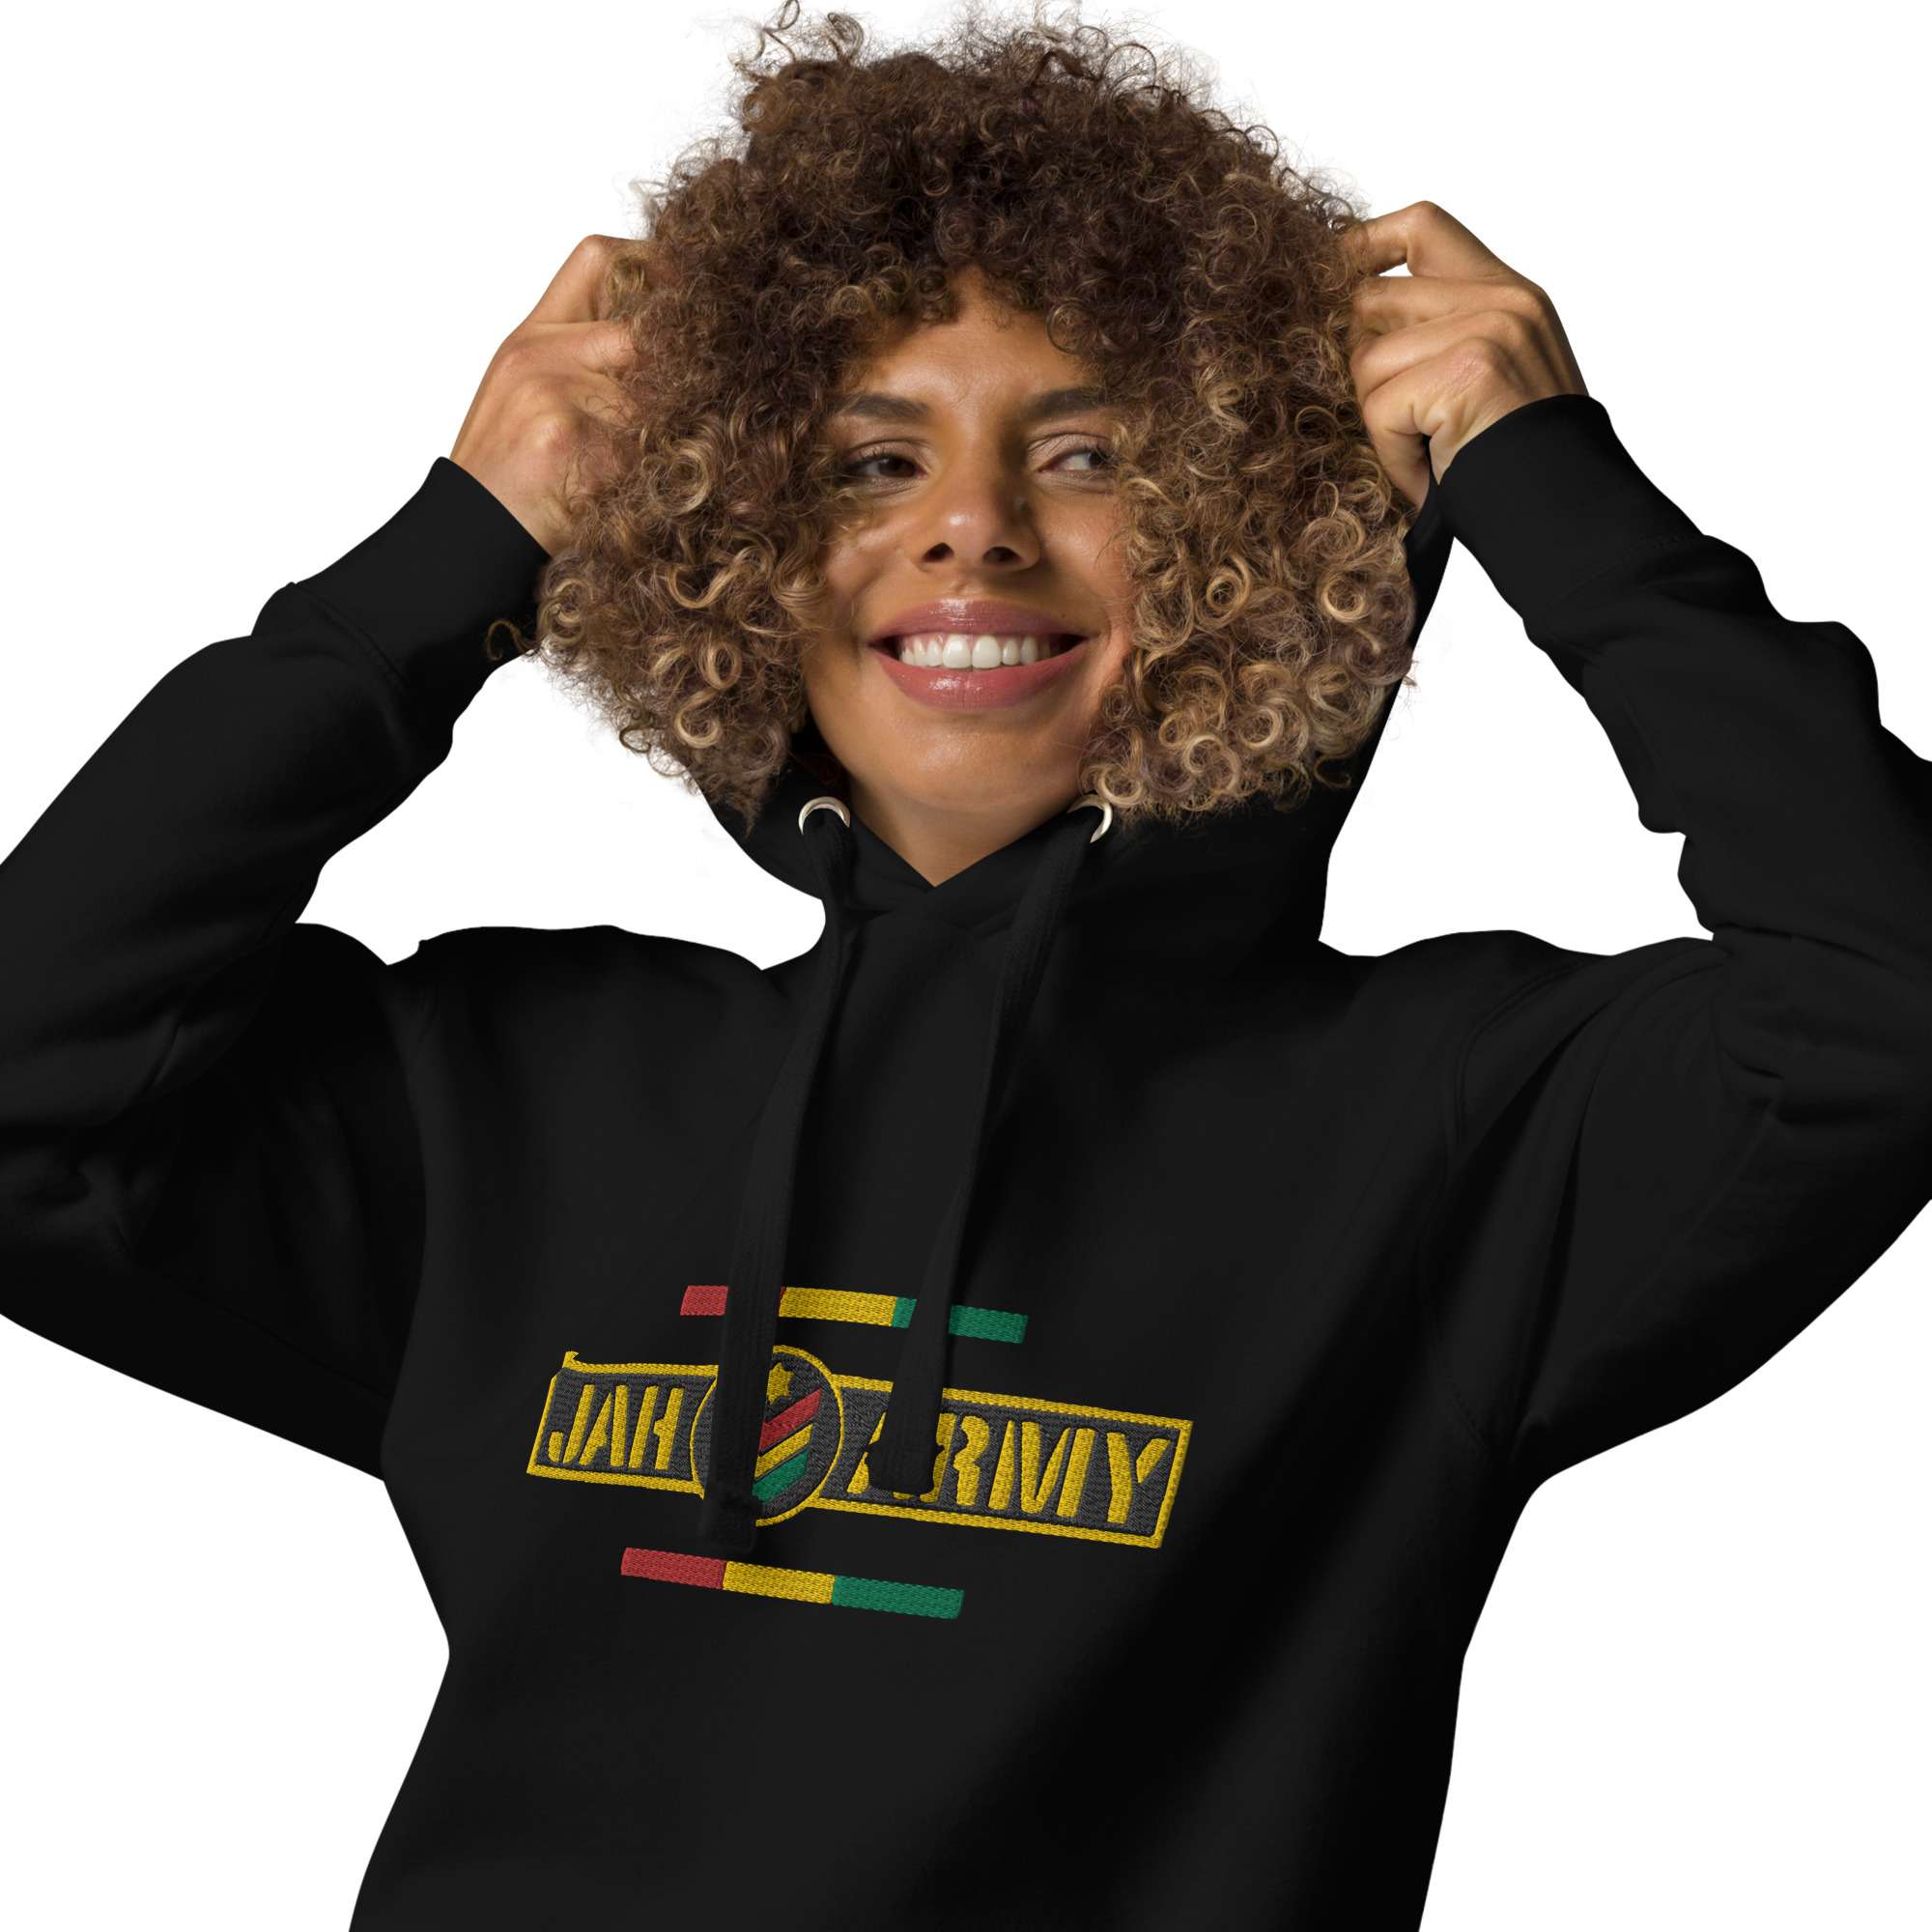 Jah Army - Sudadera con capucha unisex Rasta